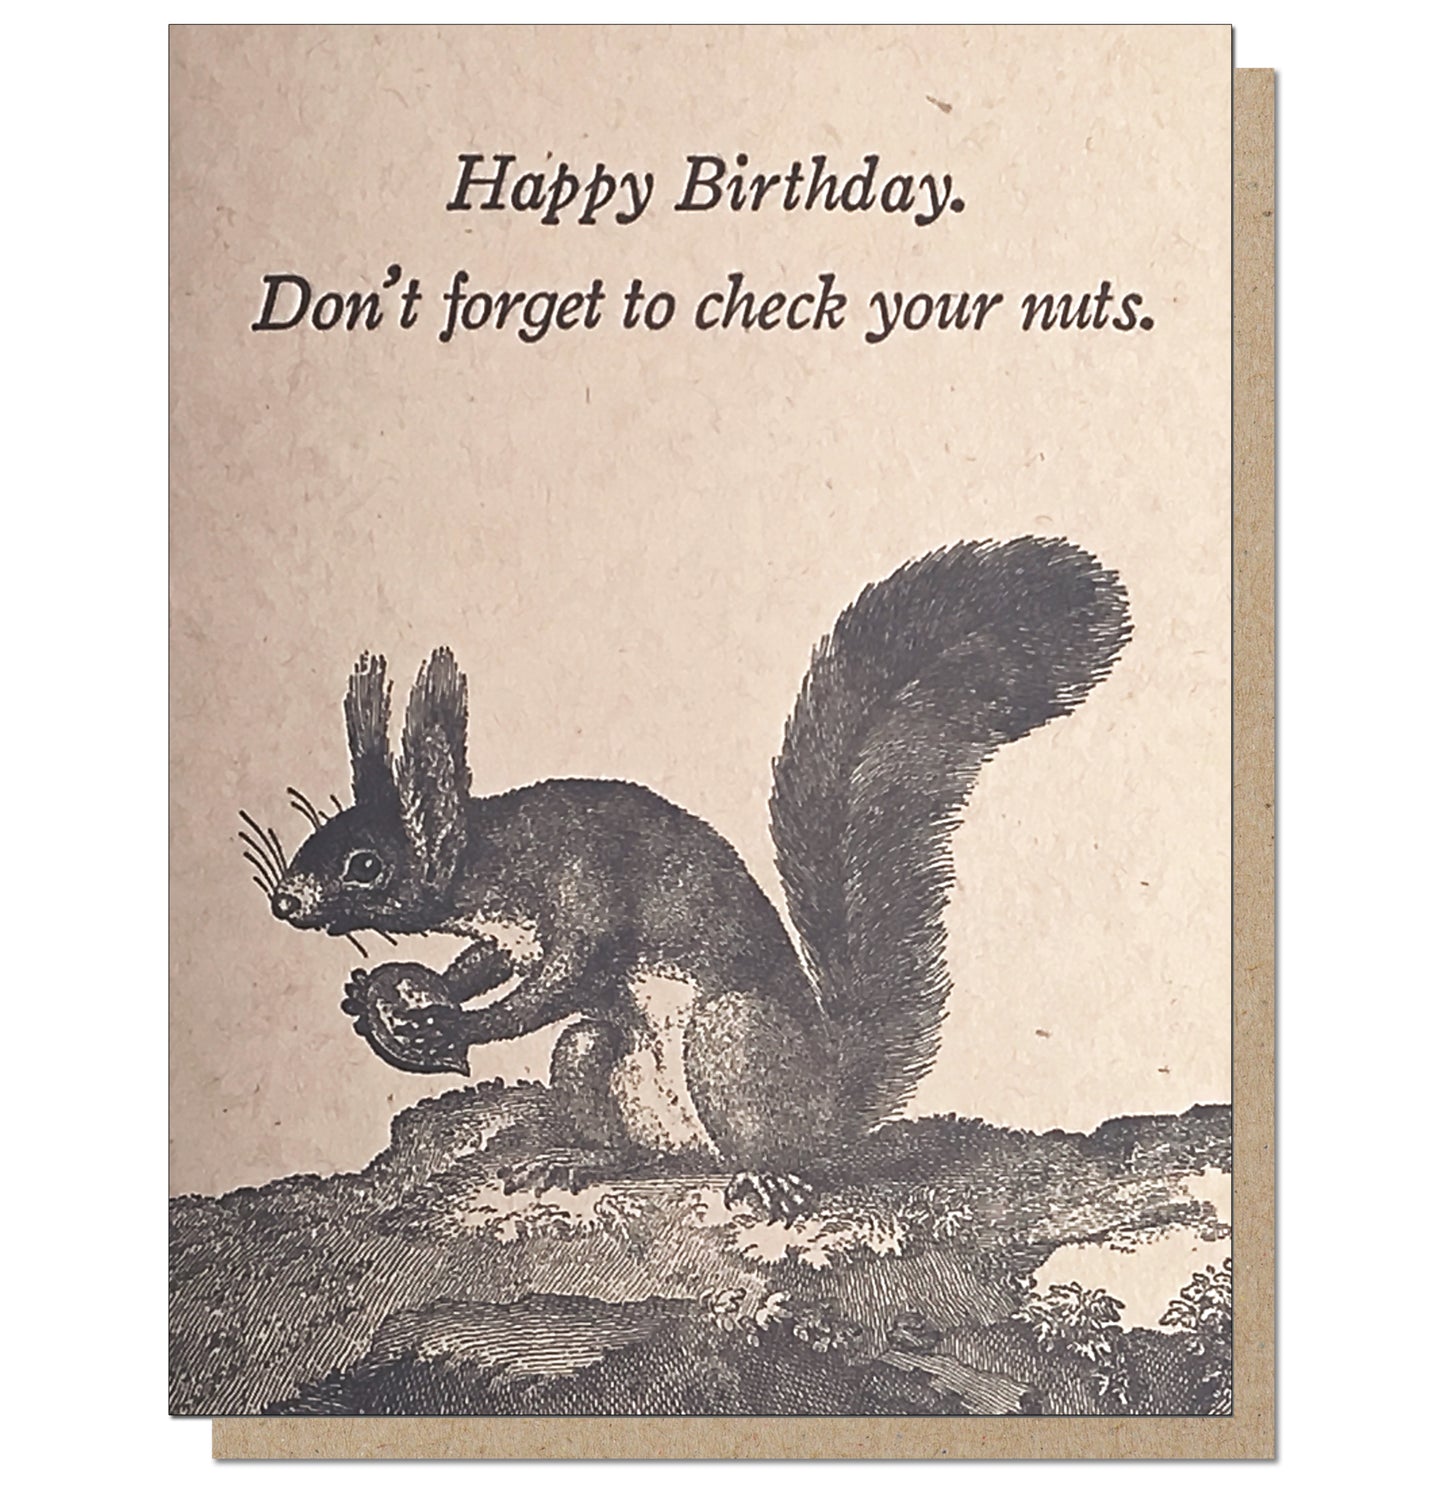 Check Your Nuts. Letterpress Men's Health Birthday.